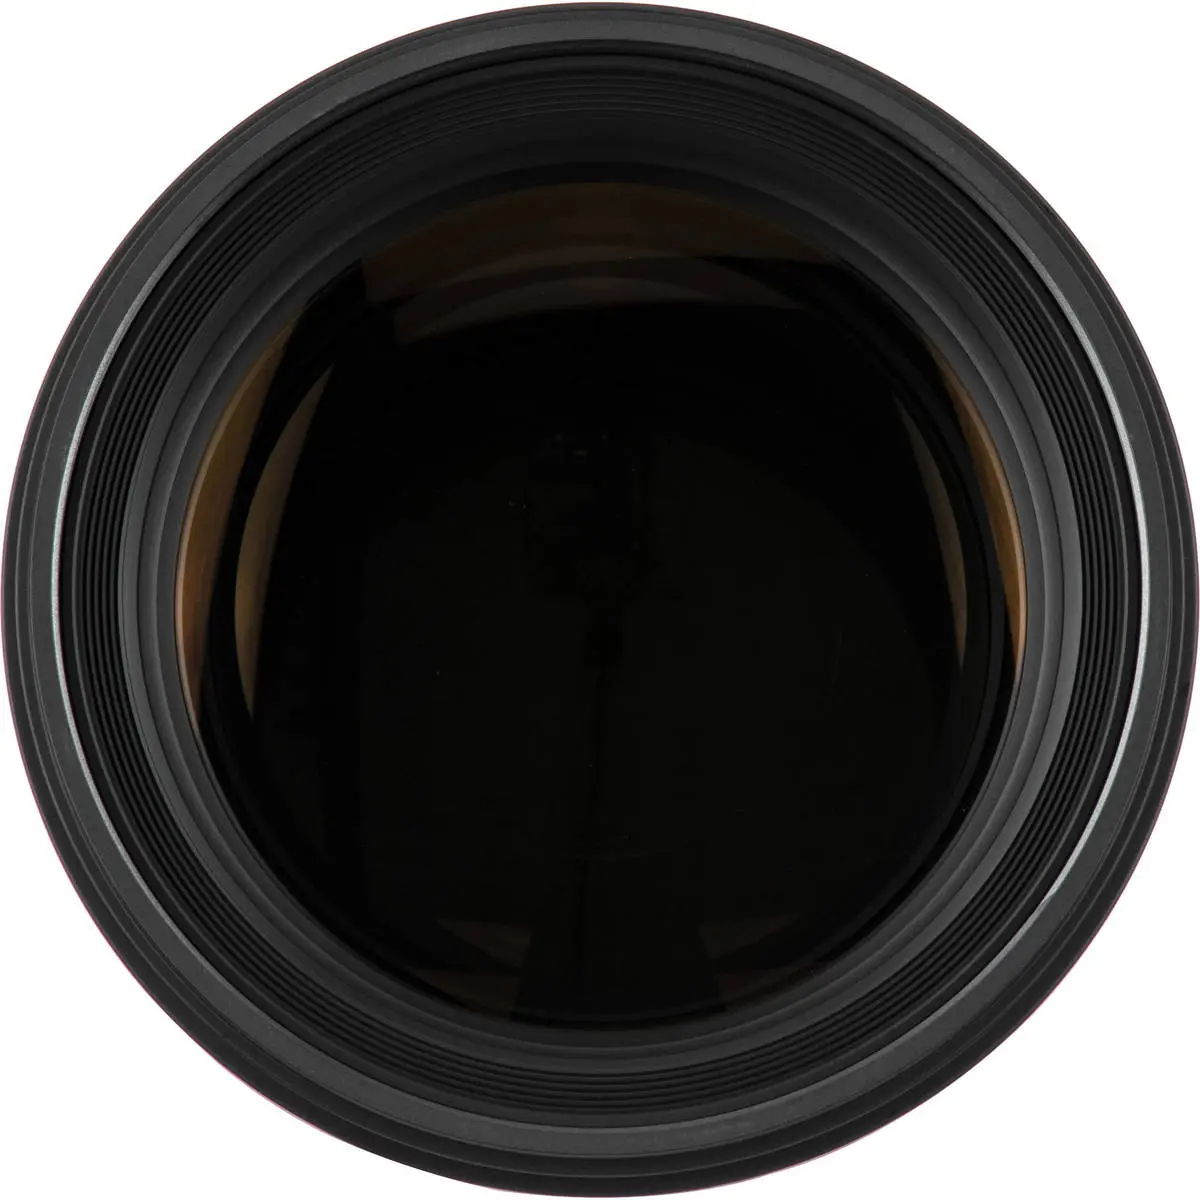 5. Sigma 105mm F1.4 DG HSM | Art (Canon) Lens